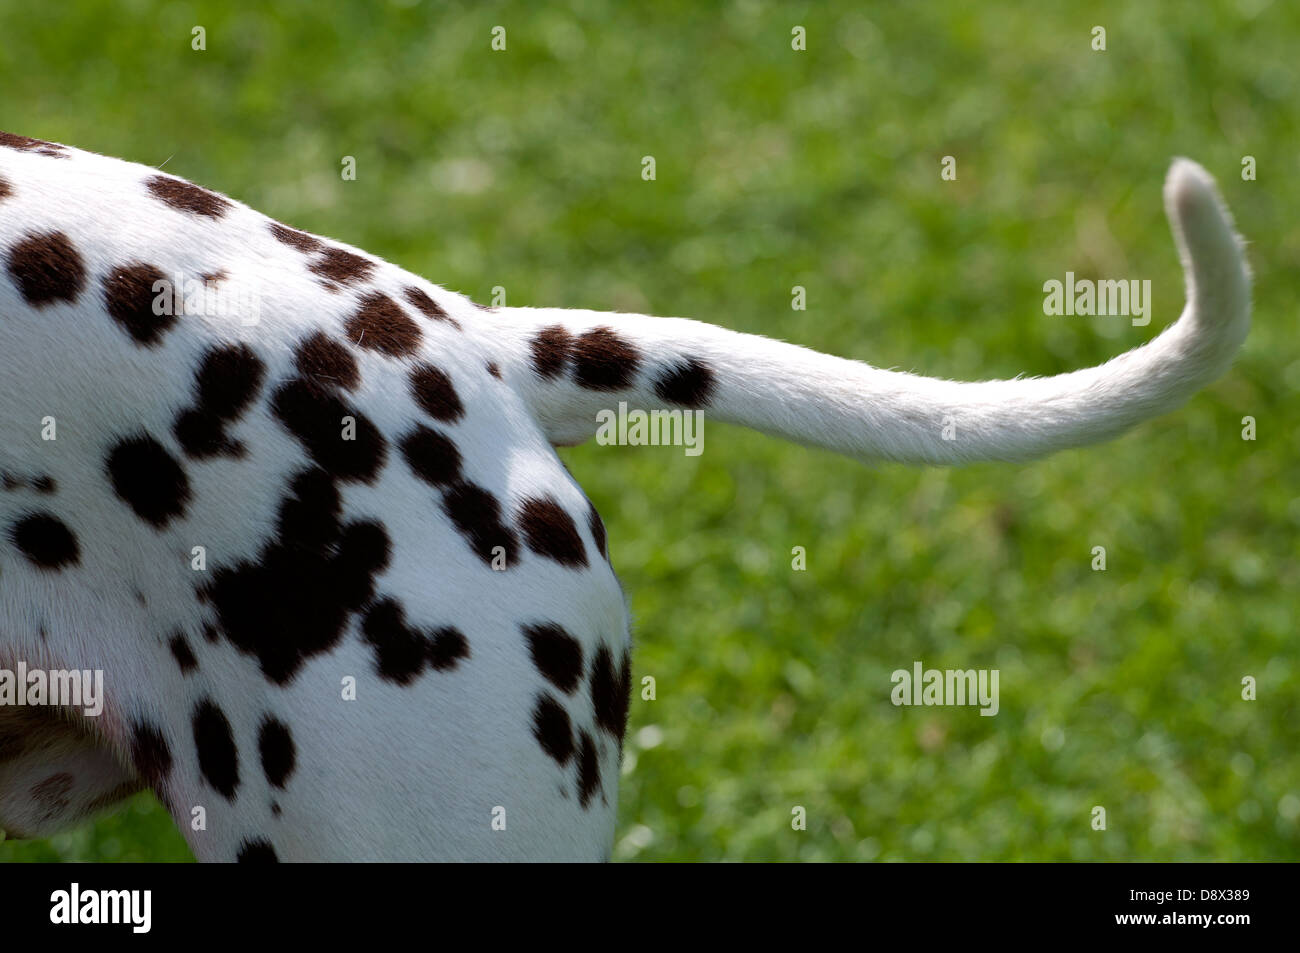 Dalmatian tail Stock Photo